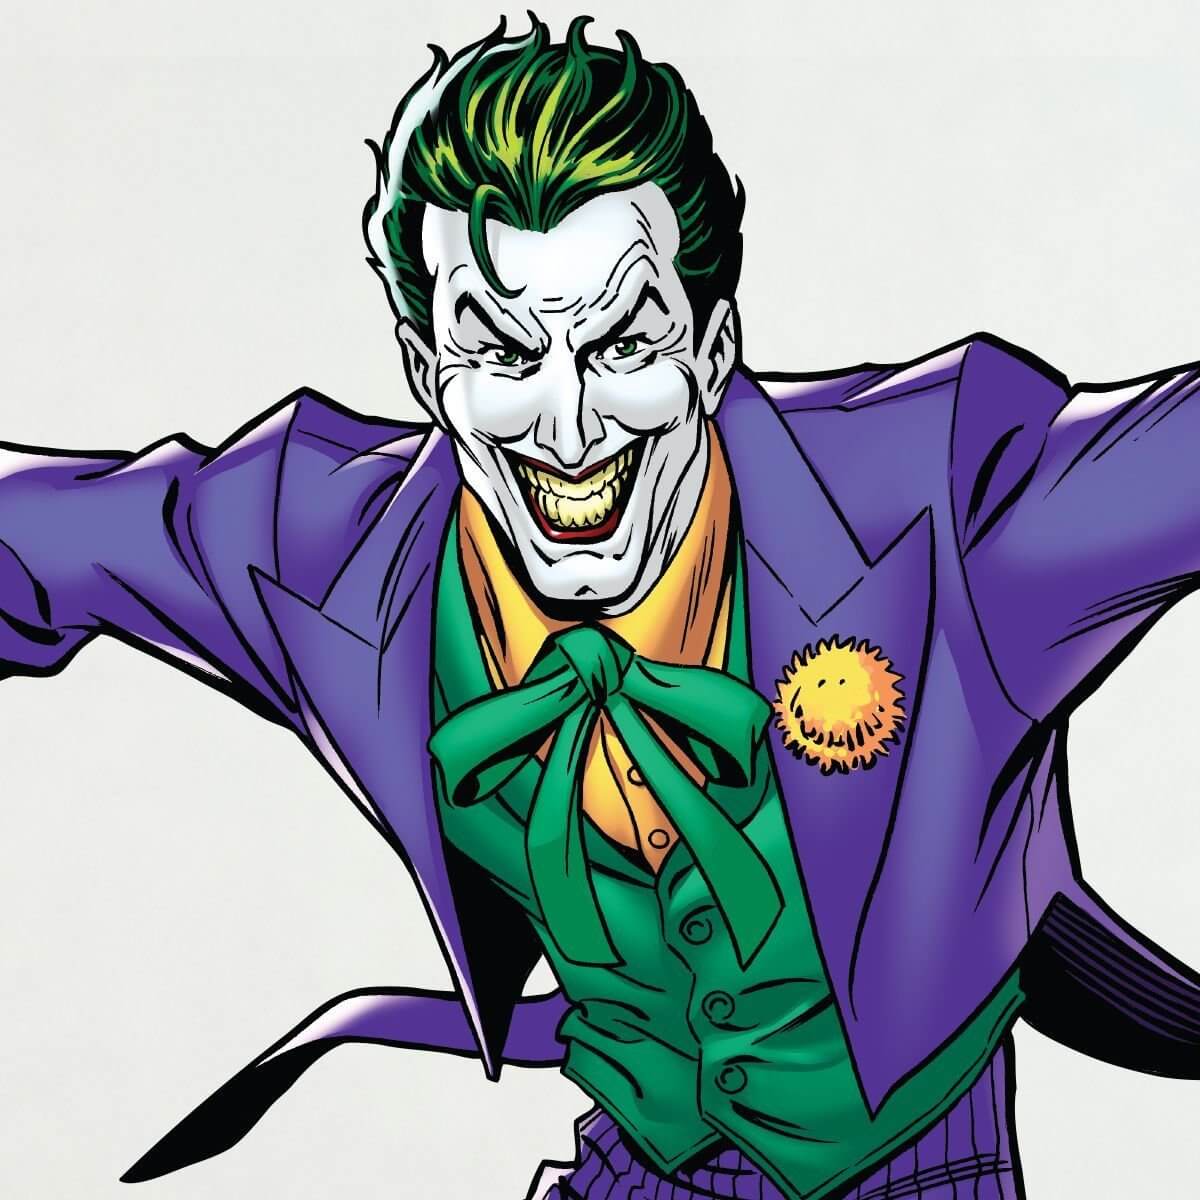 Kismet Decals Joker Crime Mastermind Licensed Wall Sticker - Easy DIY Justice League Home & Room Decor Wall Art - Kismet Decals